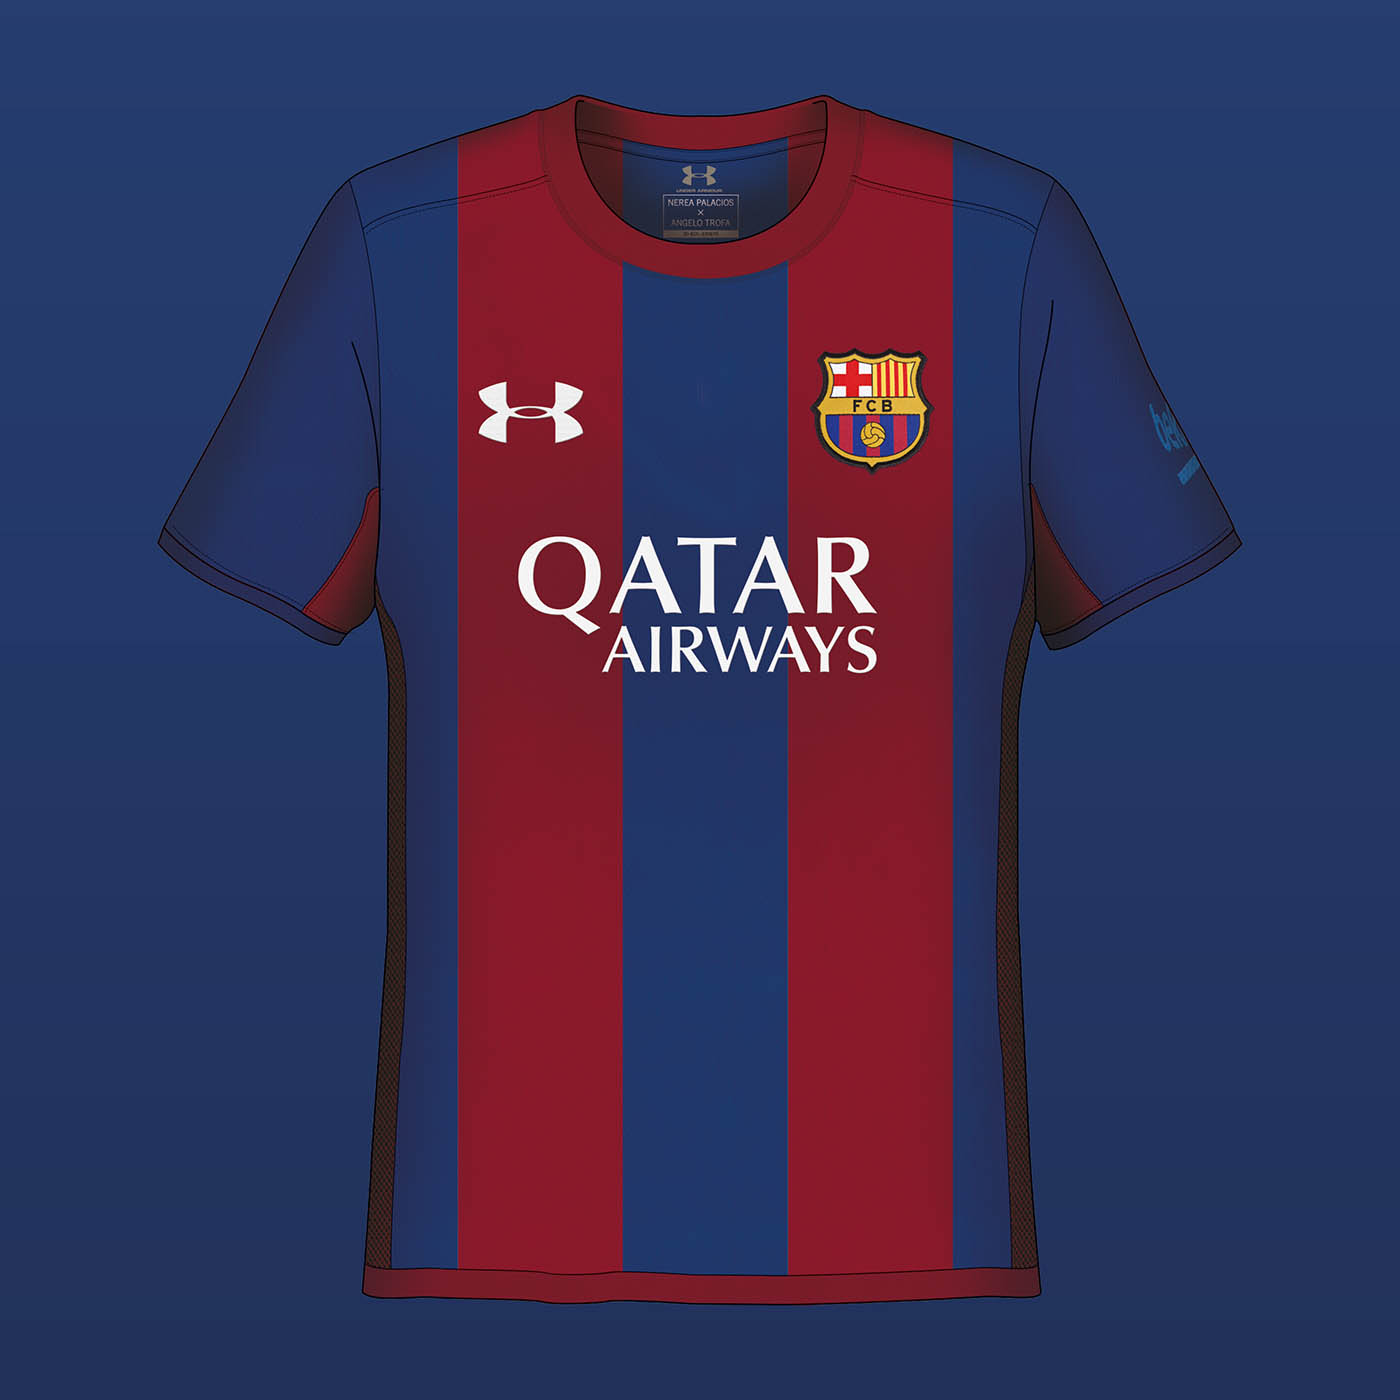 20-barcelona-jerseys-in-2-days-under-arm